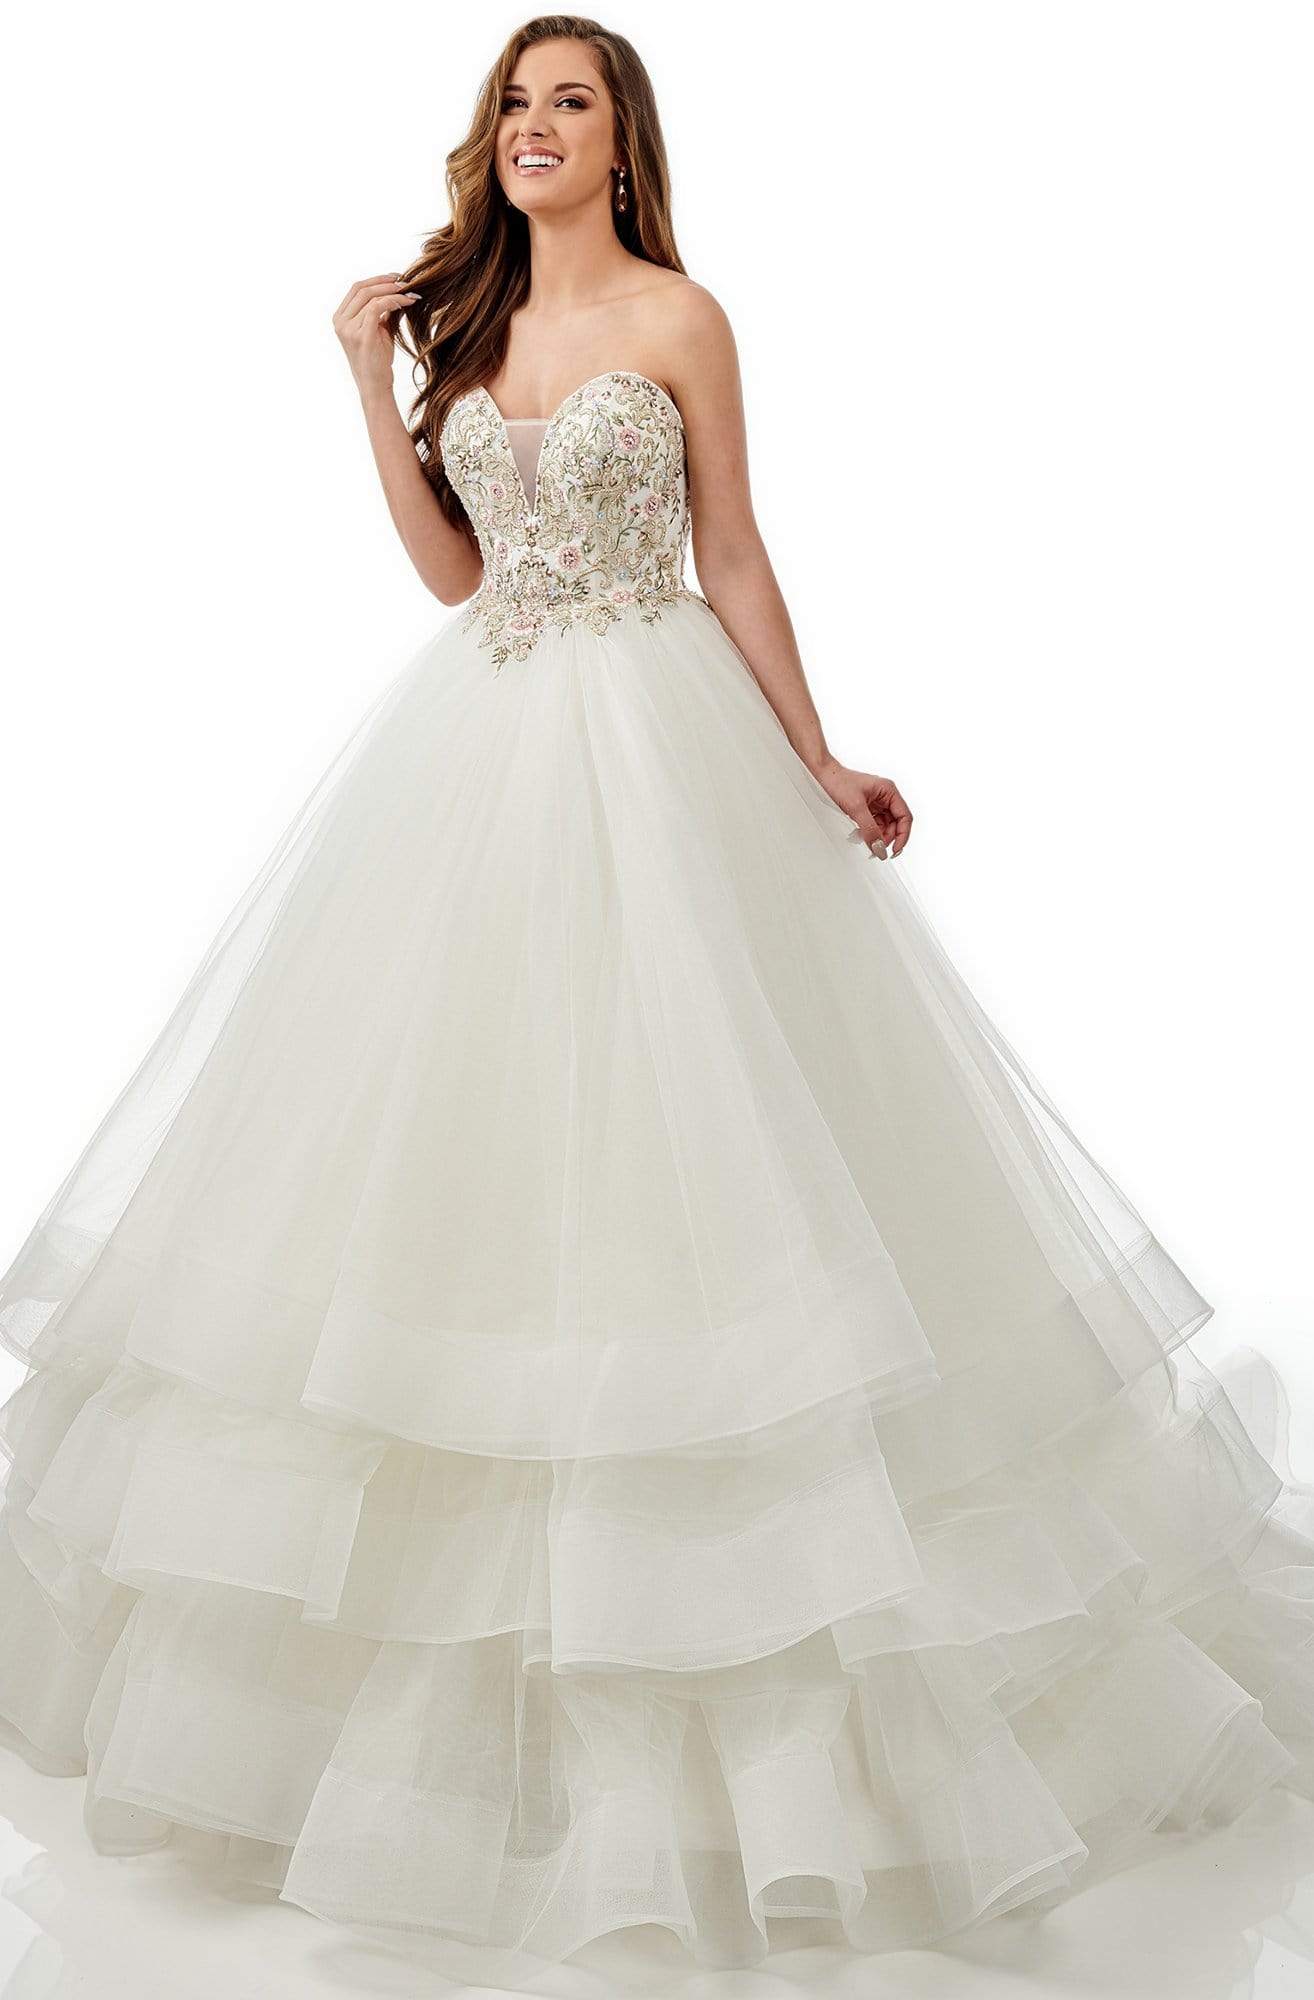 Lo'Adoro Bridal By Rachel Allan - M745 Strapless Sweetheart Ballgown Wedding Dresses 0 / Ivory/Multi